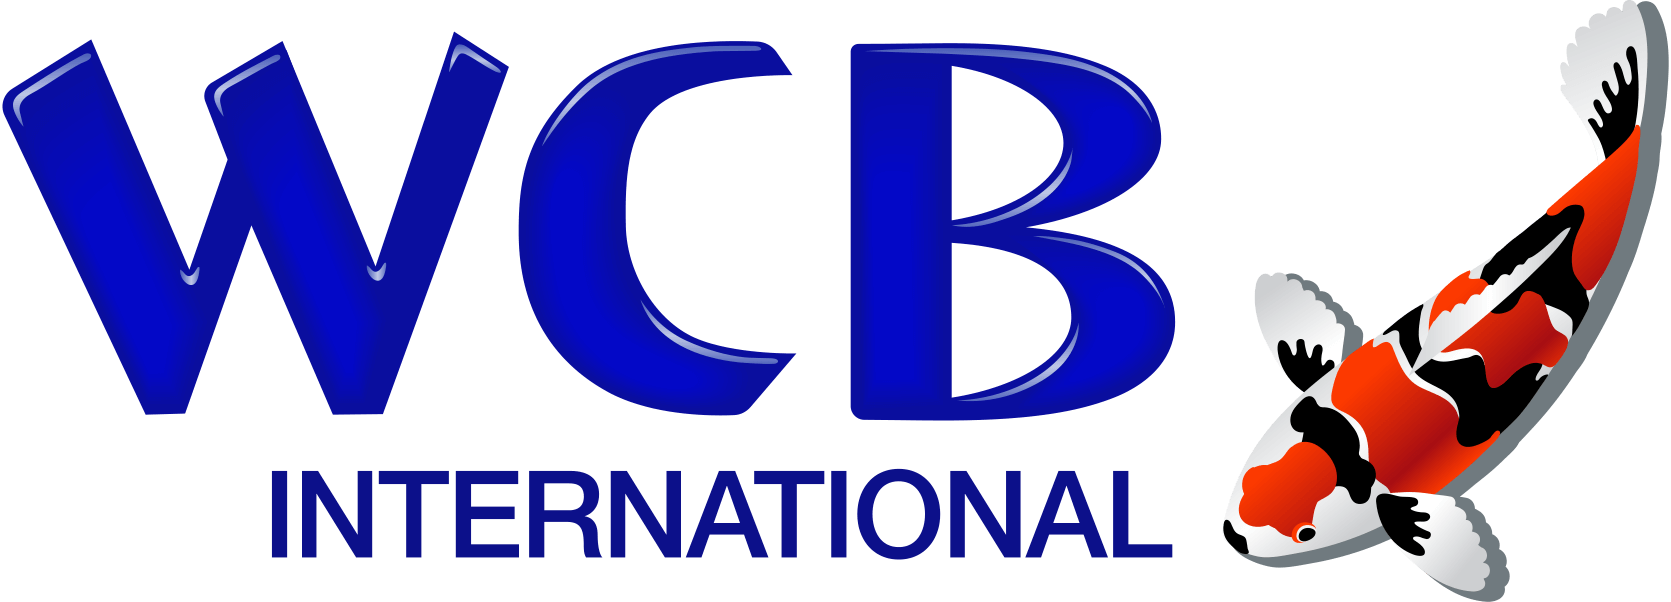 WCB International